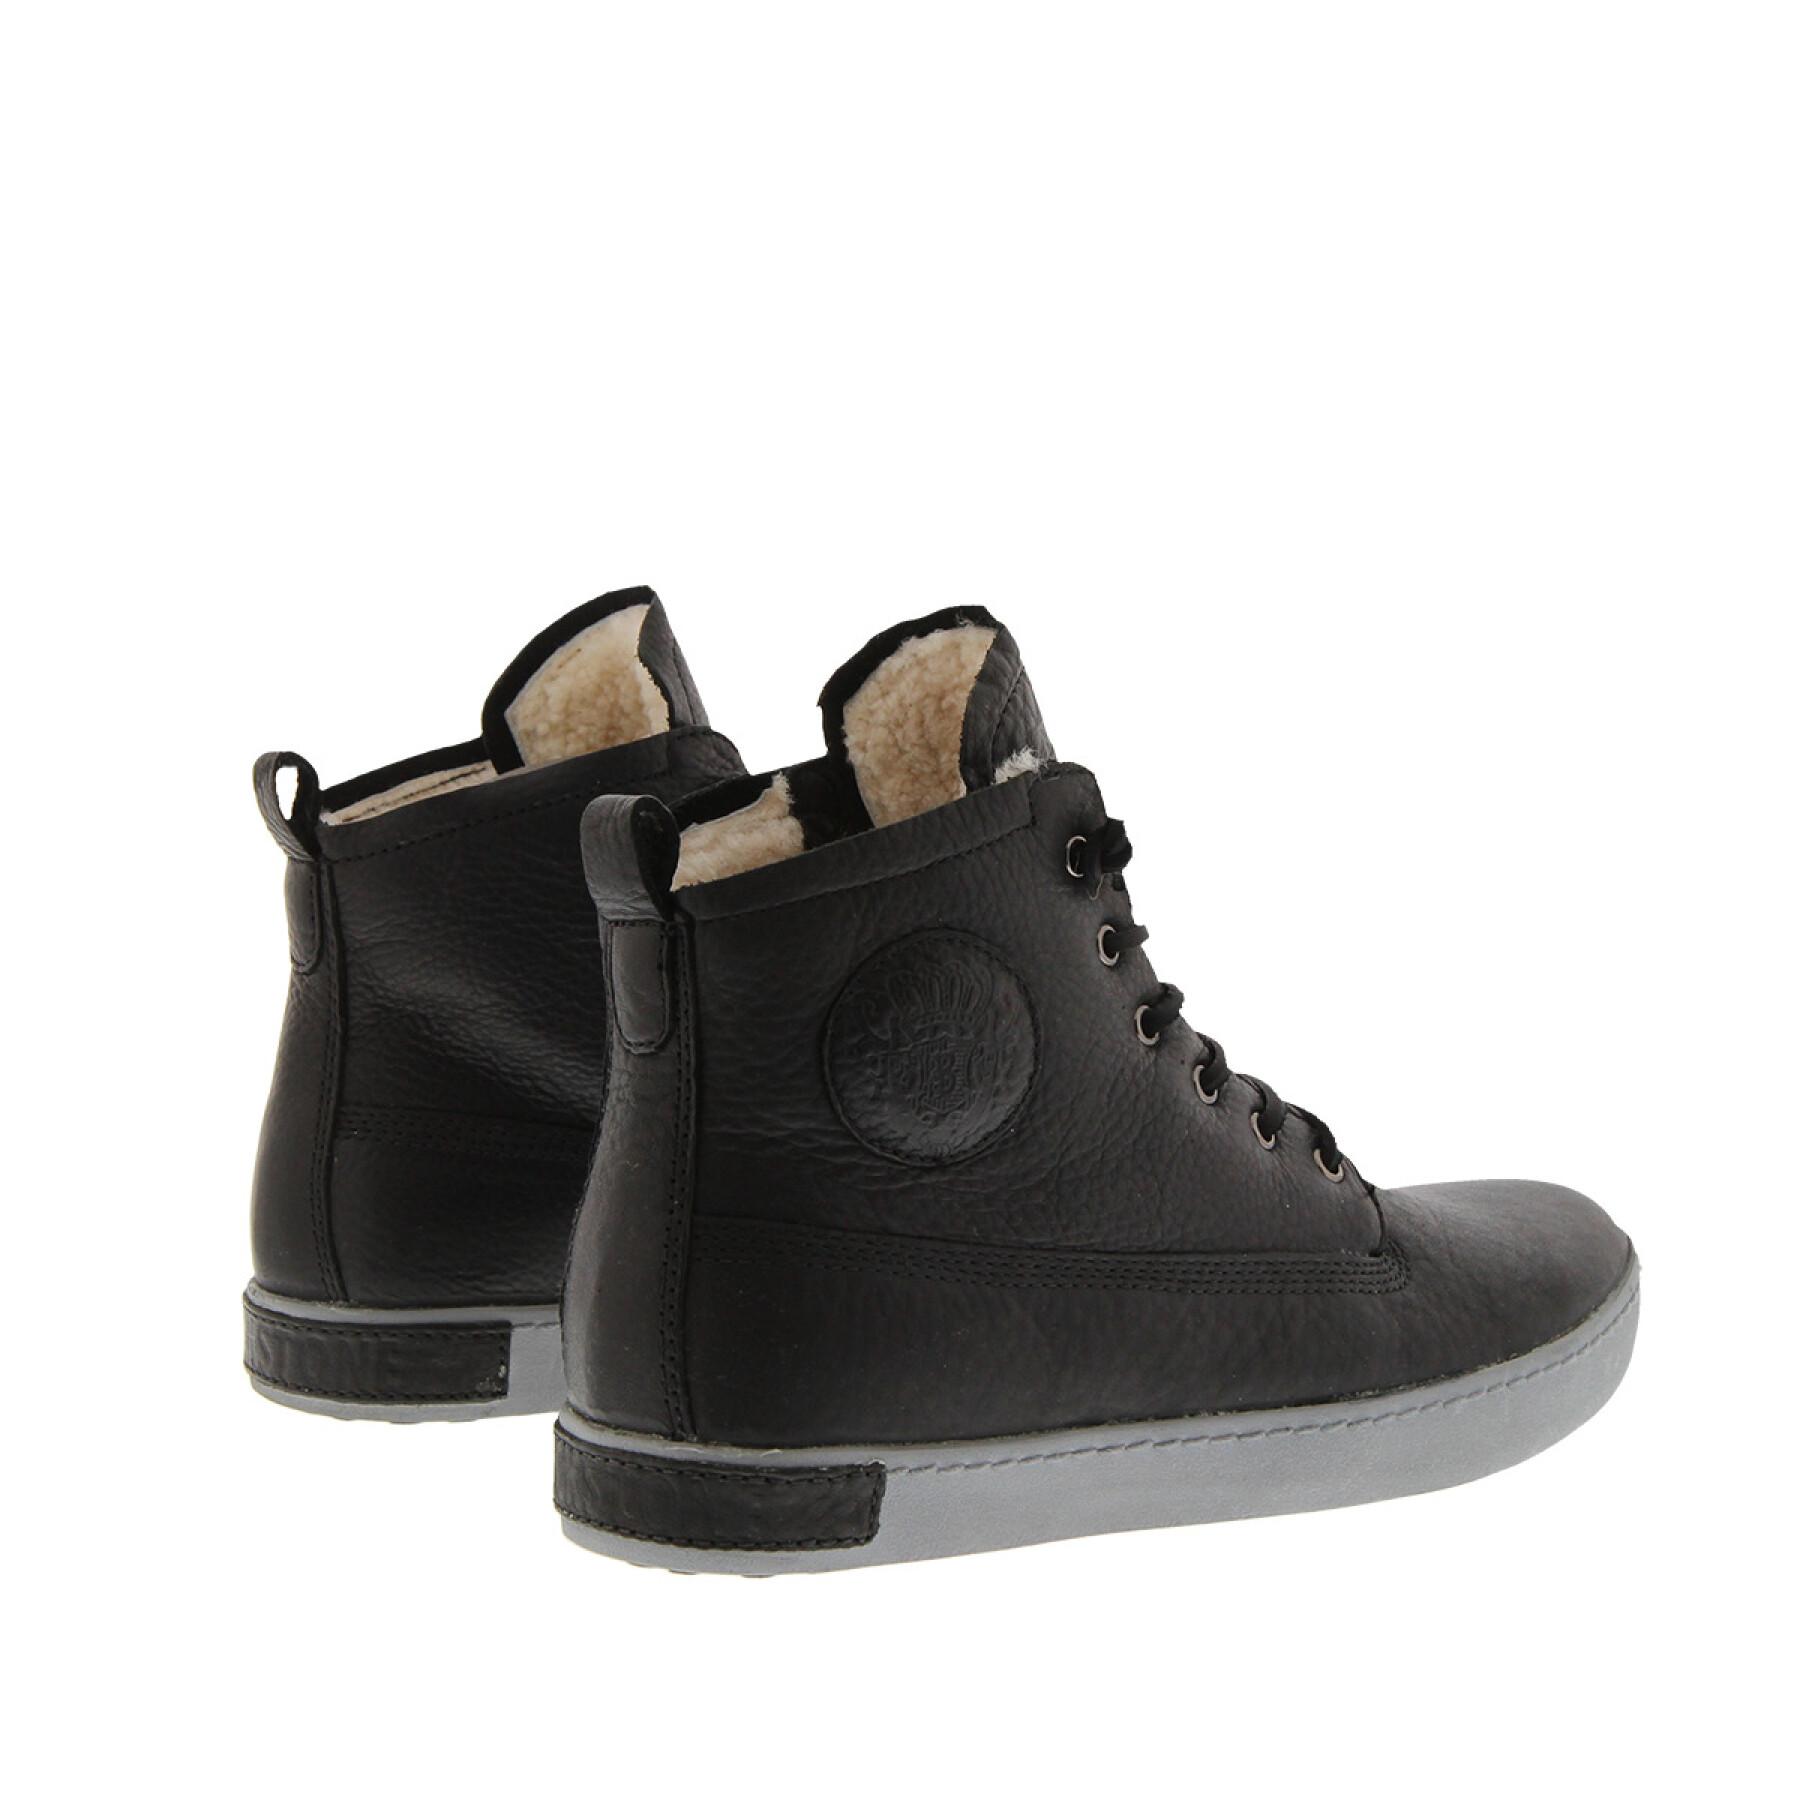 Schuhe Blackstone Original 6'' Boots - Fur